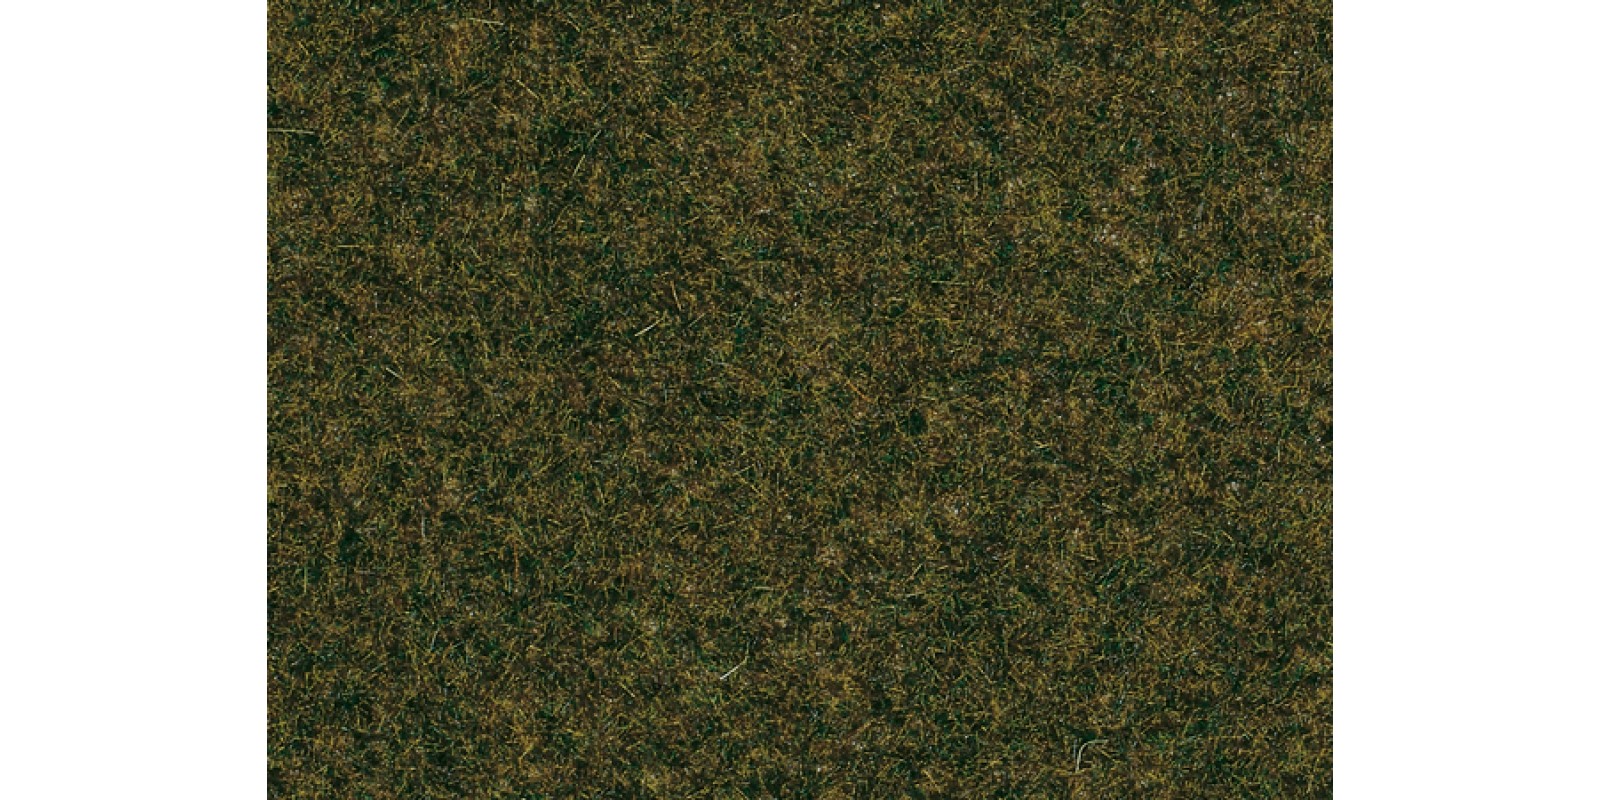 AU75593 Grass fibres forest floor 2 mm